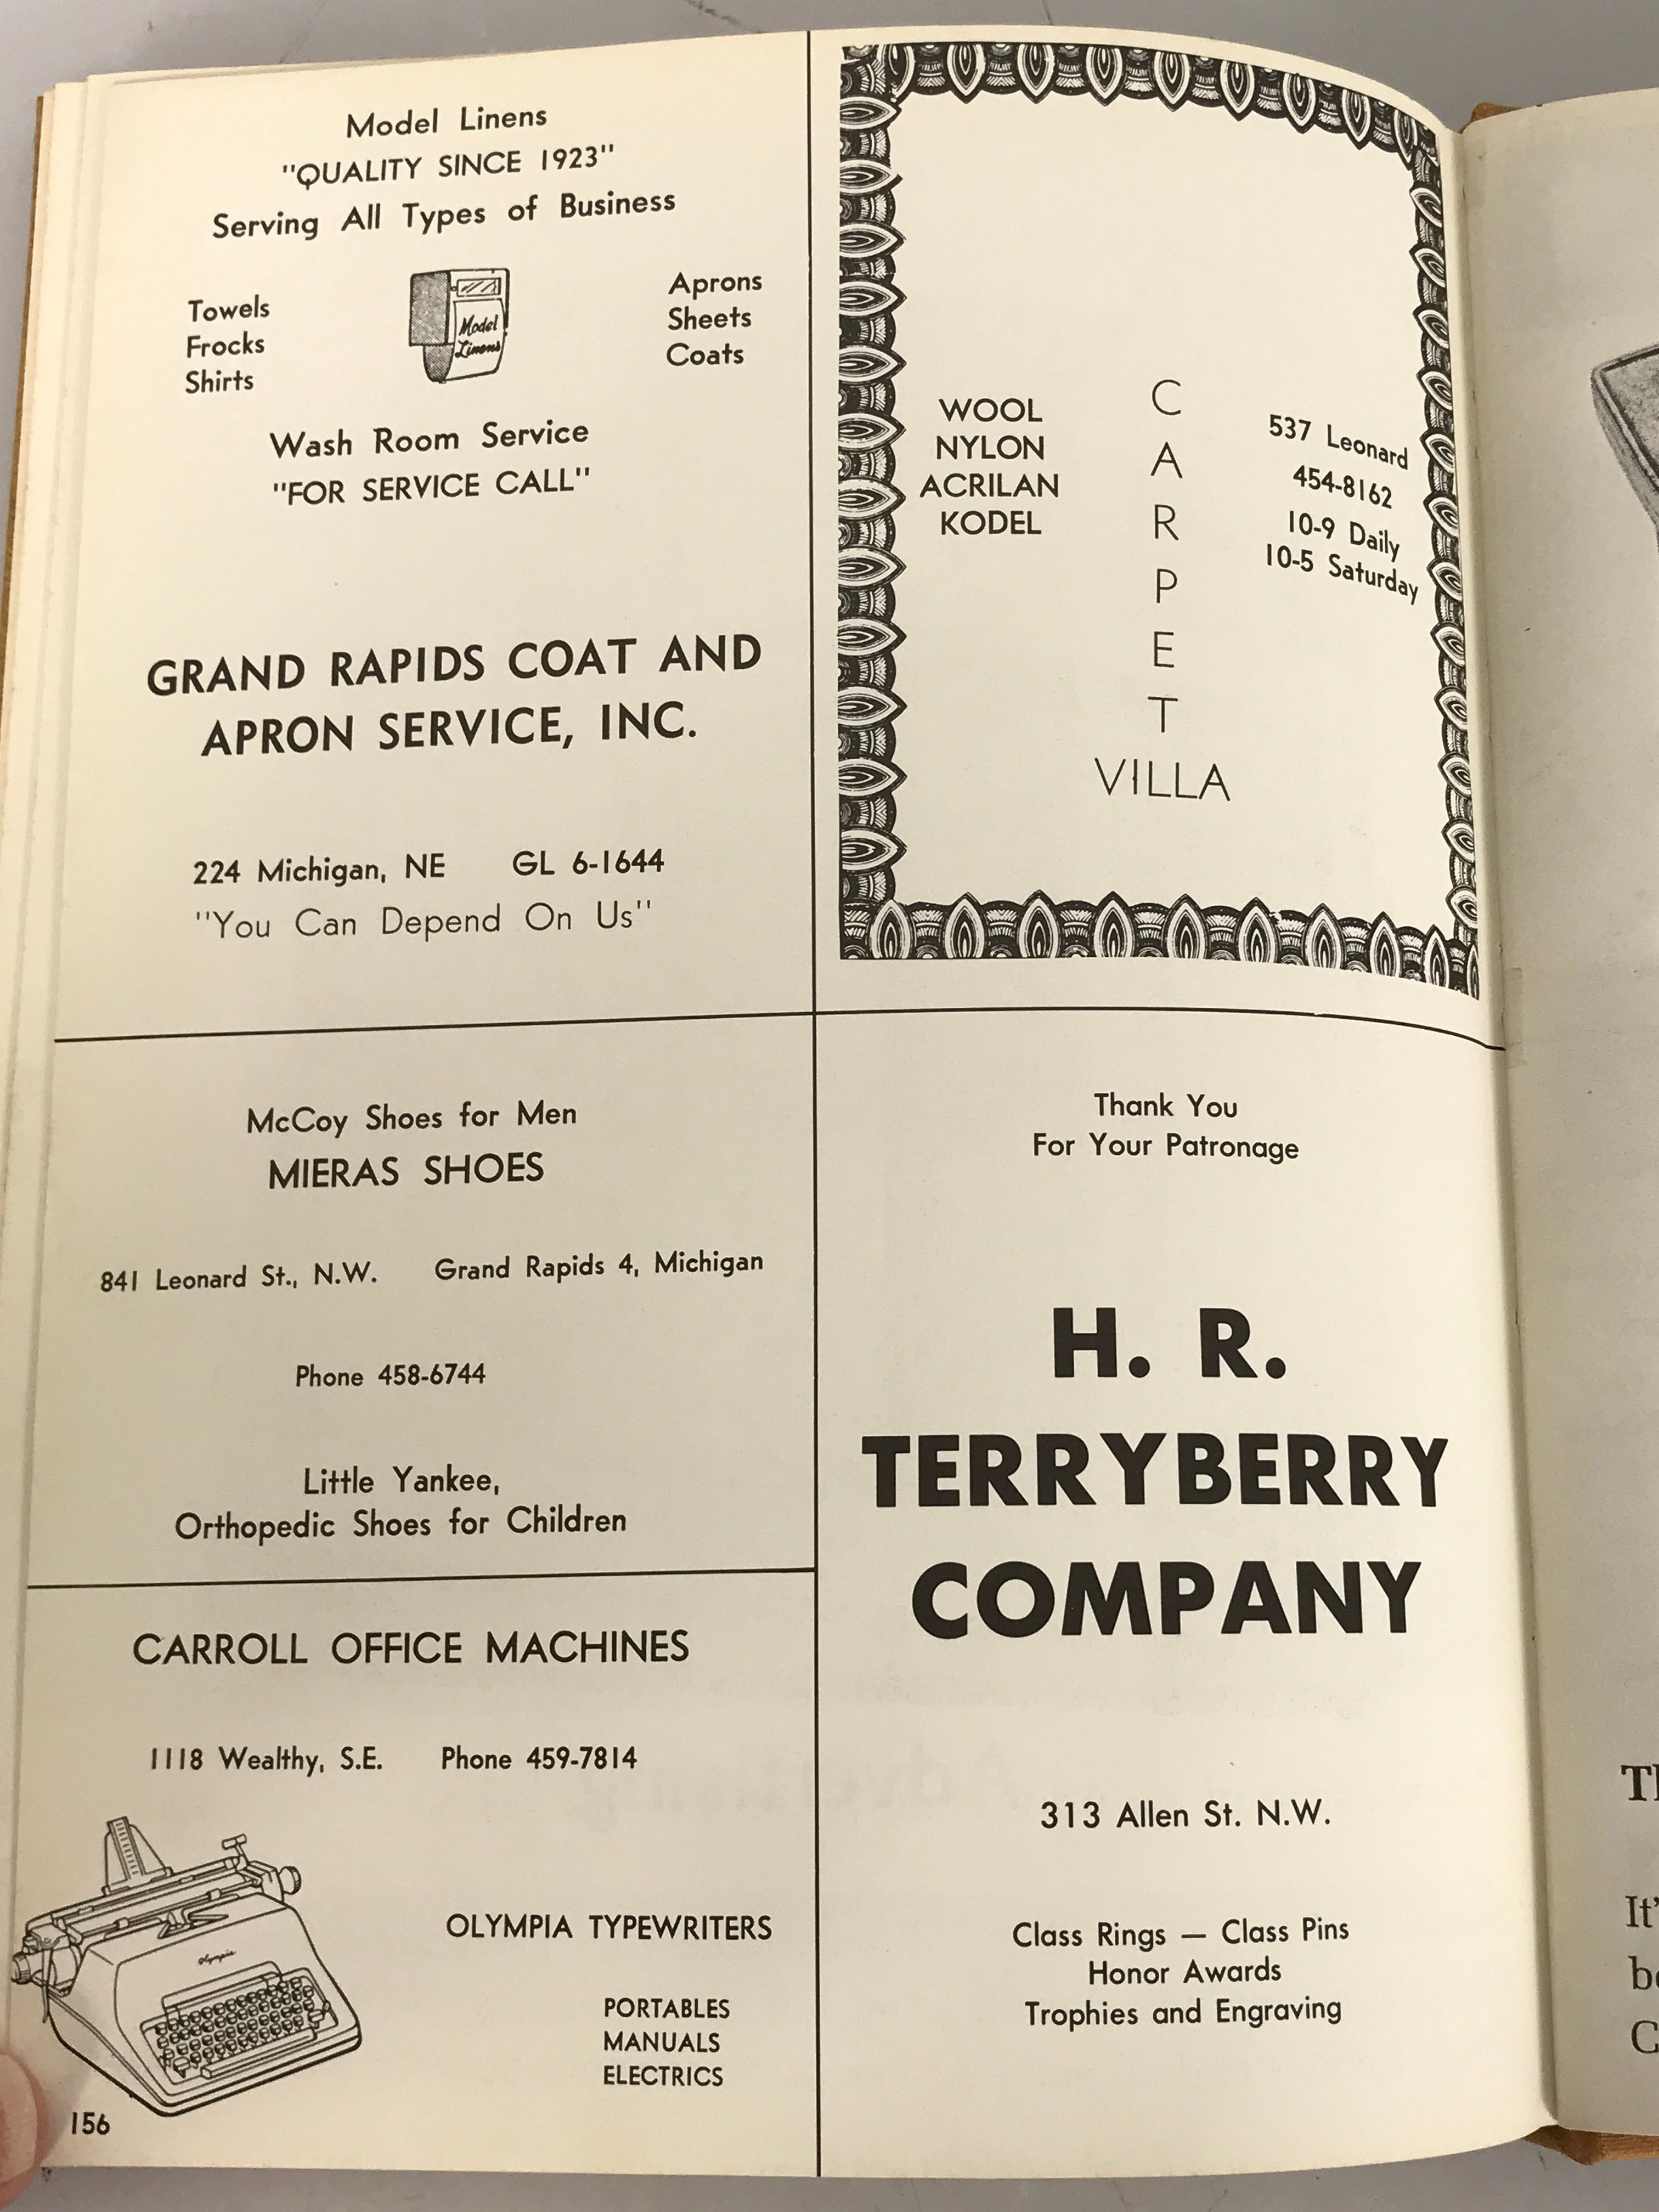 1969 Davenport College (University) Yearbook Grand Rapids Michigan HC